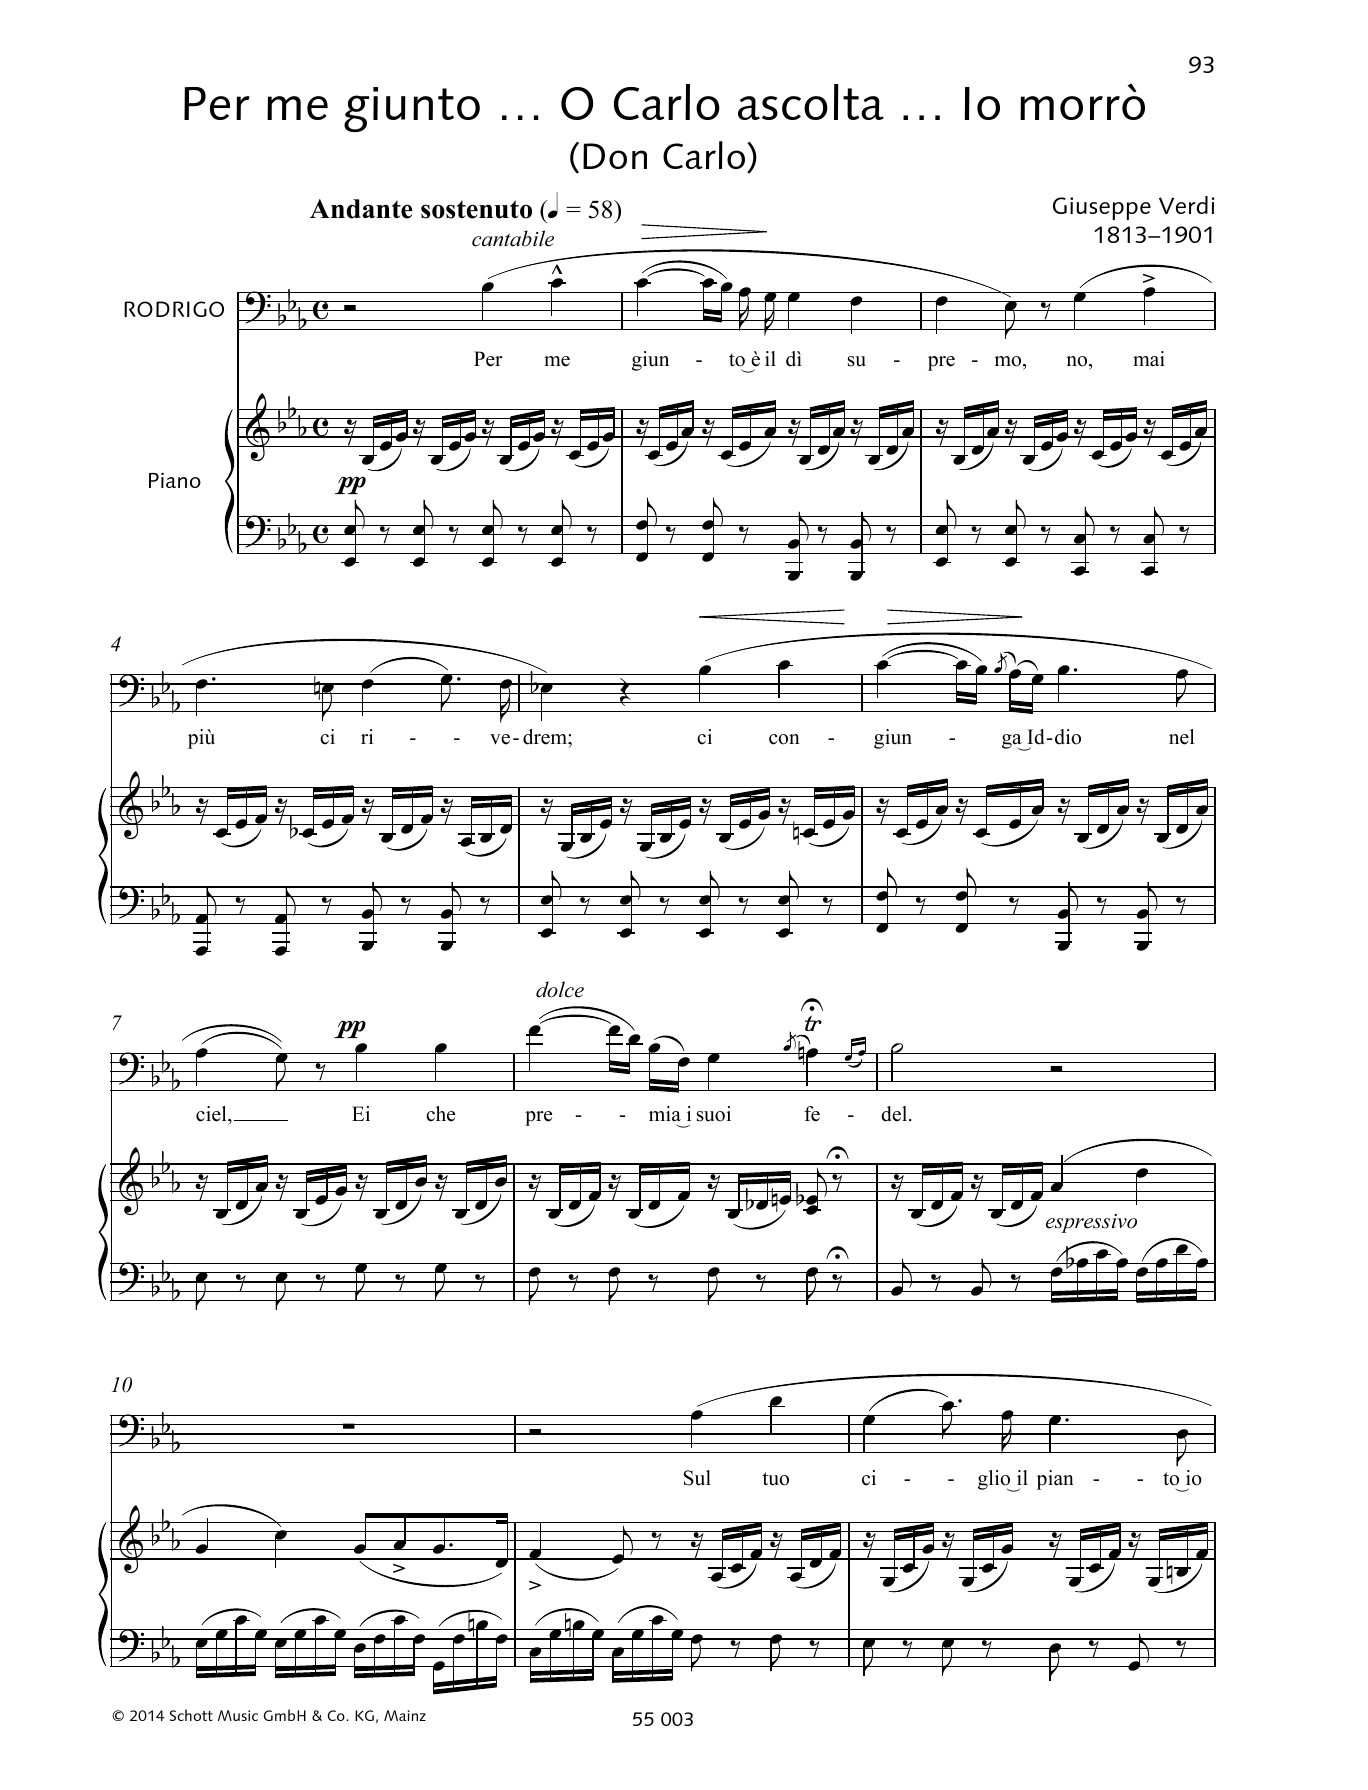 Giuseppe Verdi Per me giunto... O Carlo ascolta... lo morrò Sheet Music Notes & Chords for Piano & Vocal - Download or Print PDF